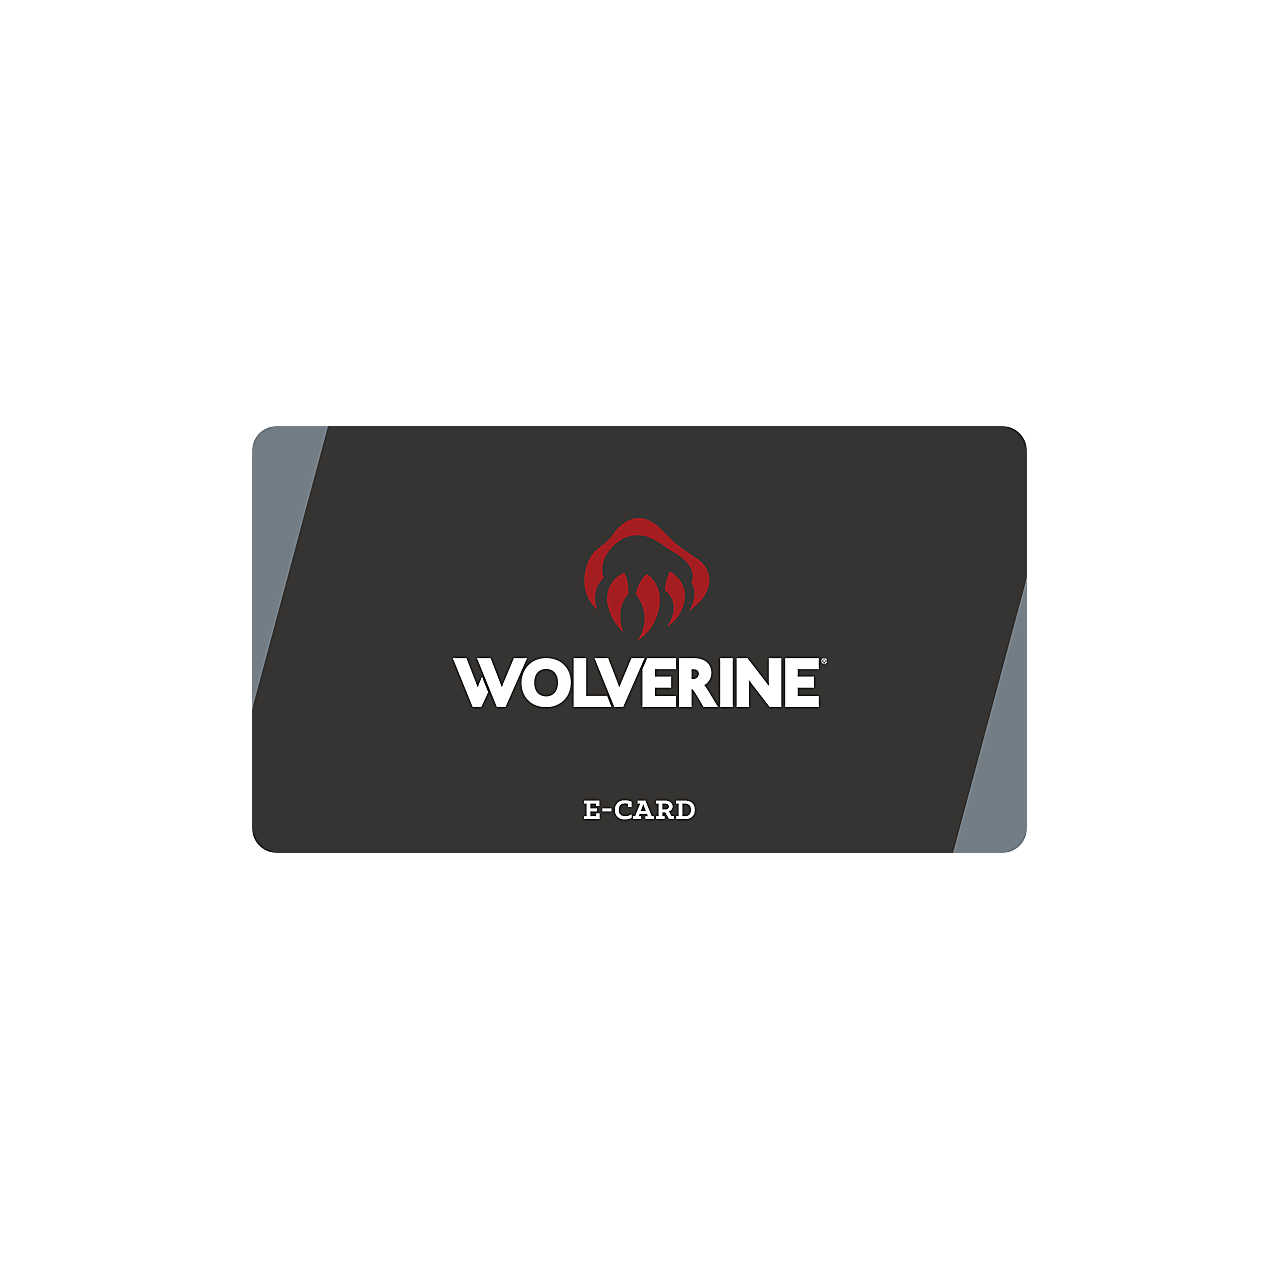 www.wolverine.com